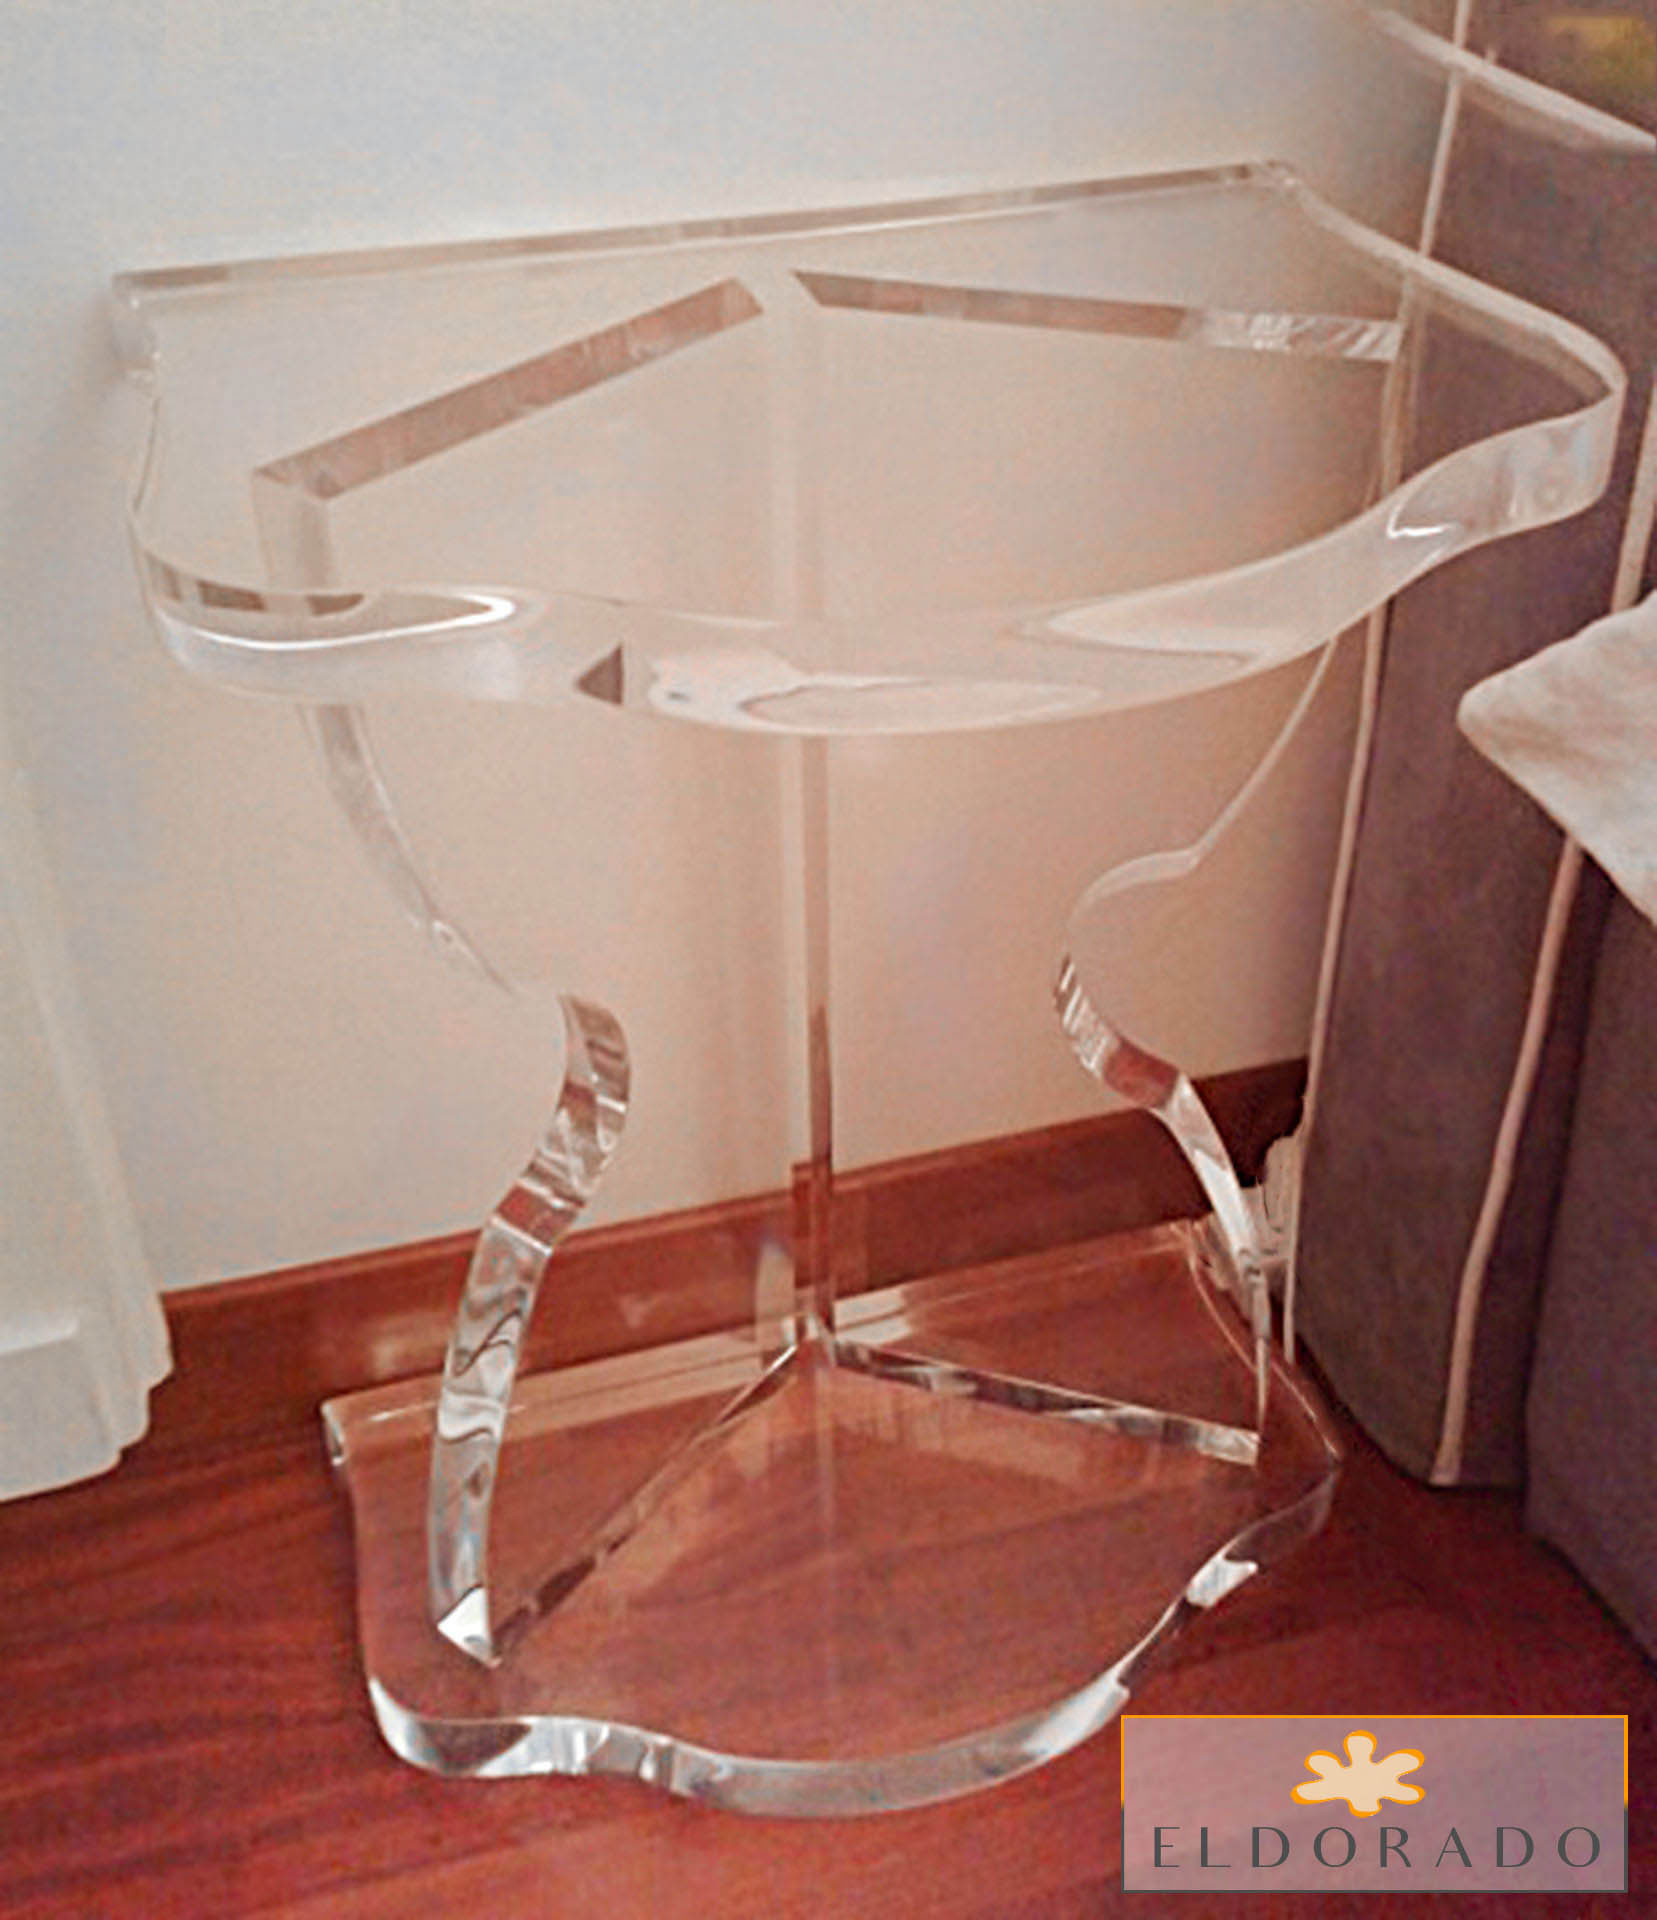 comodini-modello-sirio-acrylic-nightstand-table-sirio-style-jpg